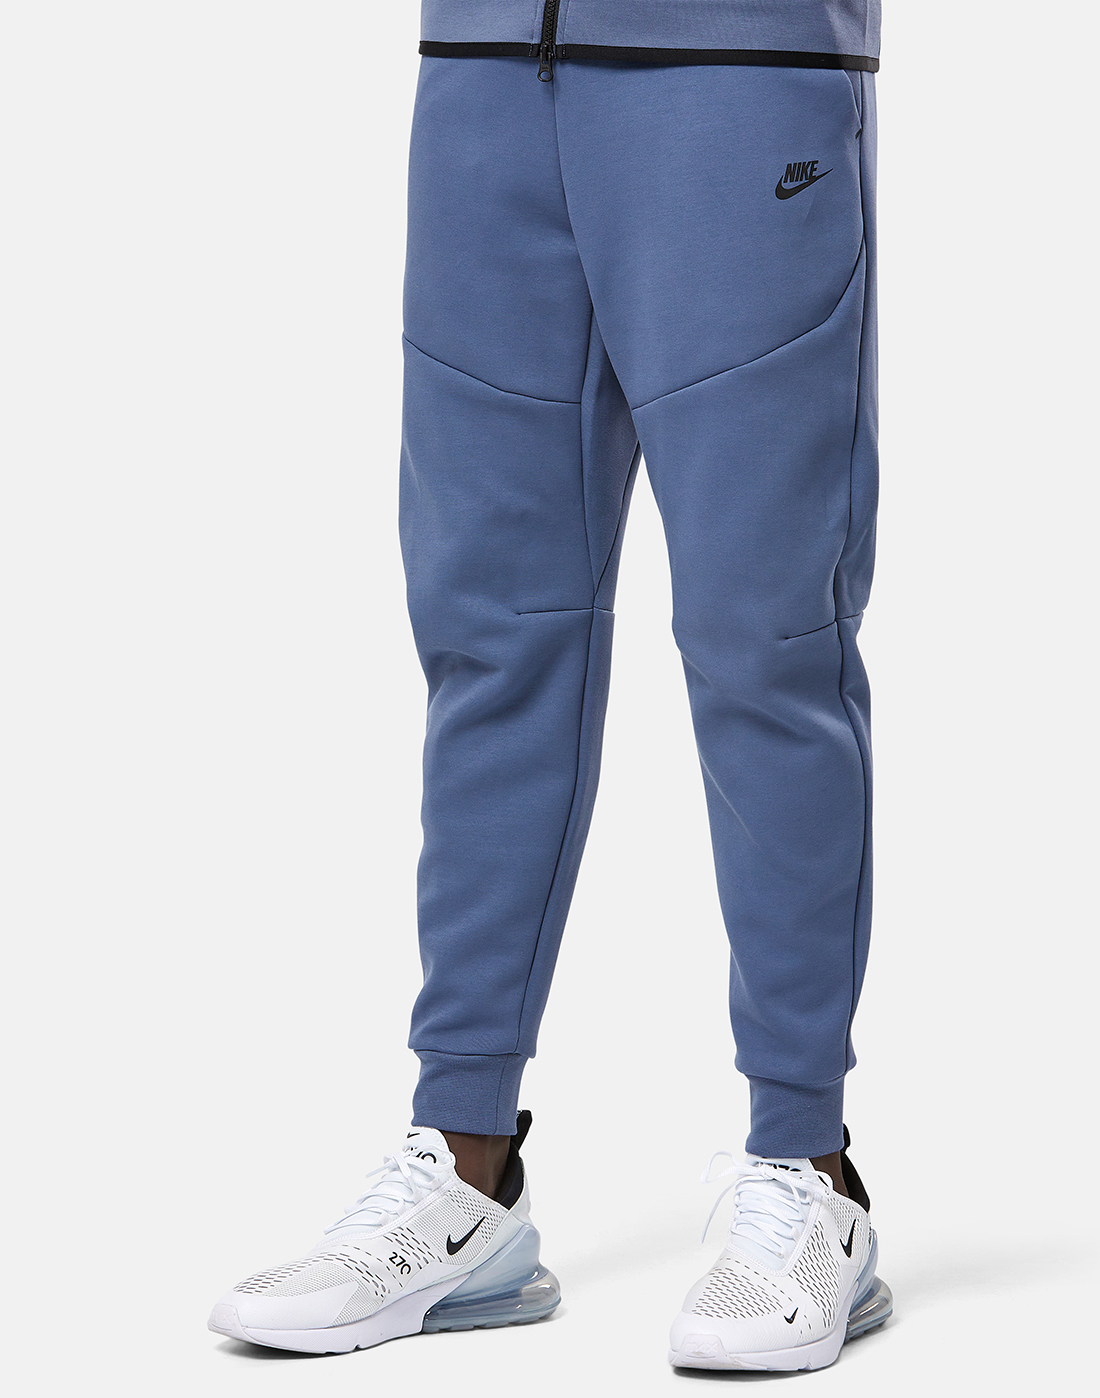 Nike Mens Tech Fleece Pants - Blue, nike alpha shark white black cleat  sandals shoes